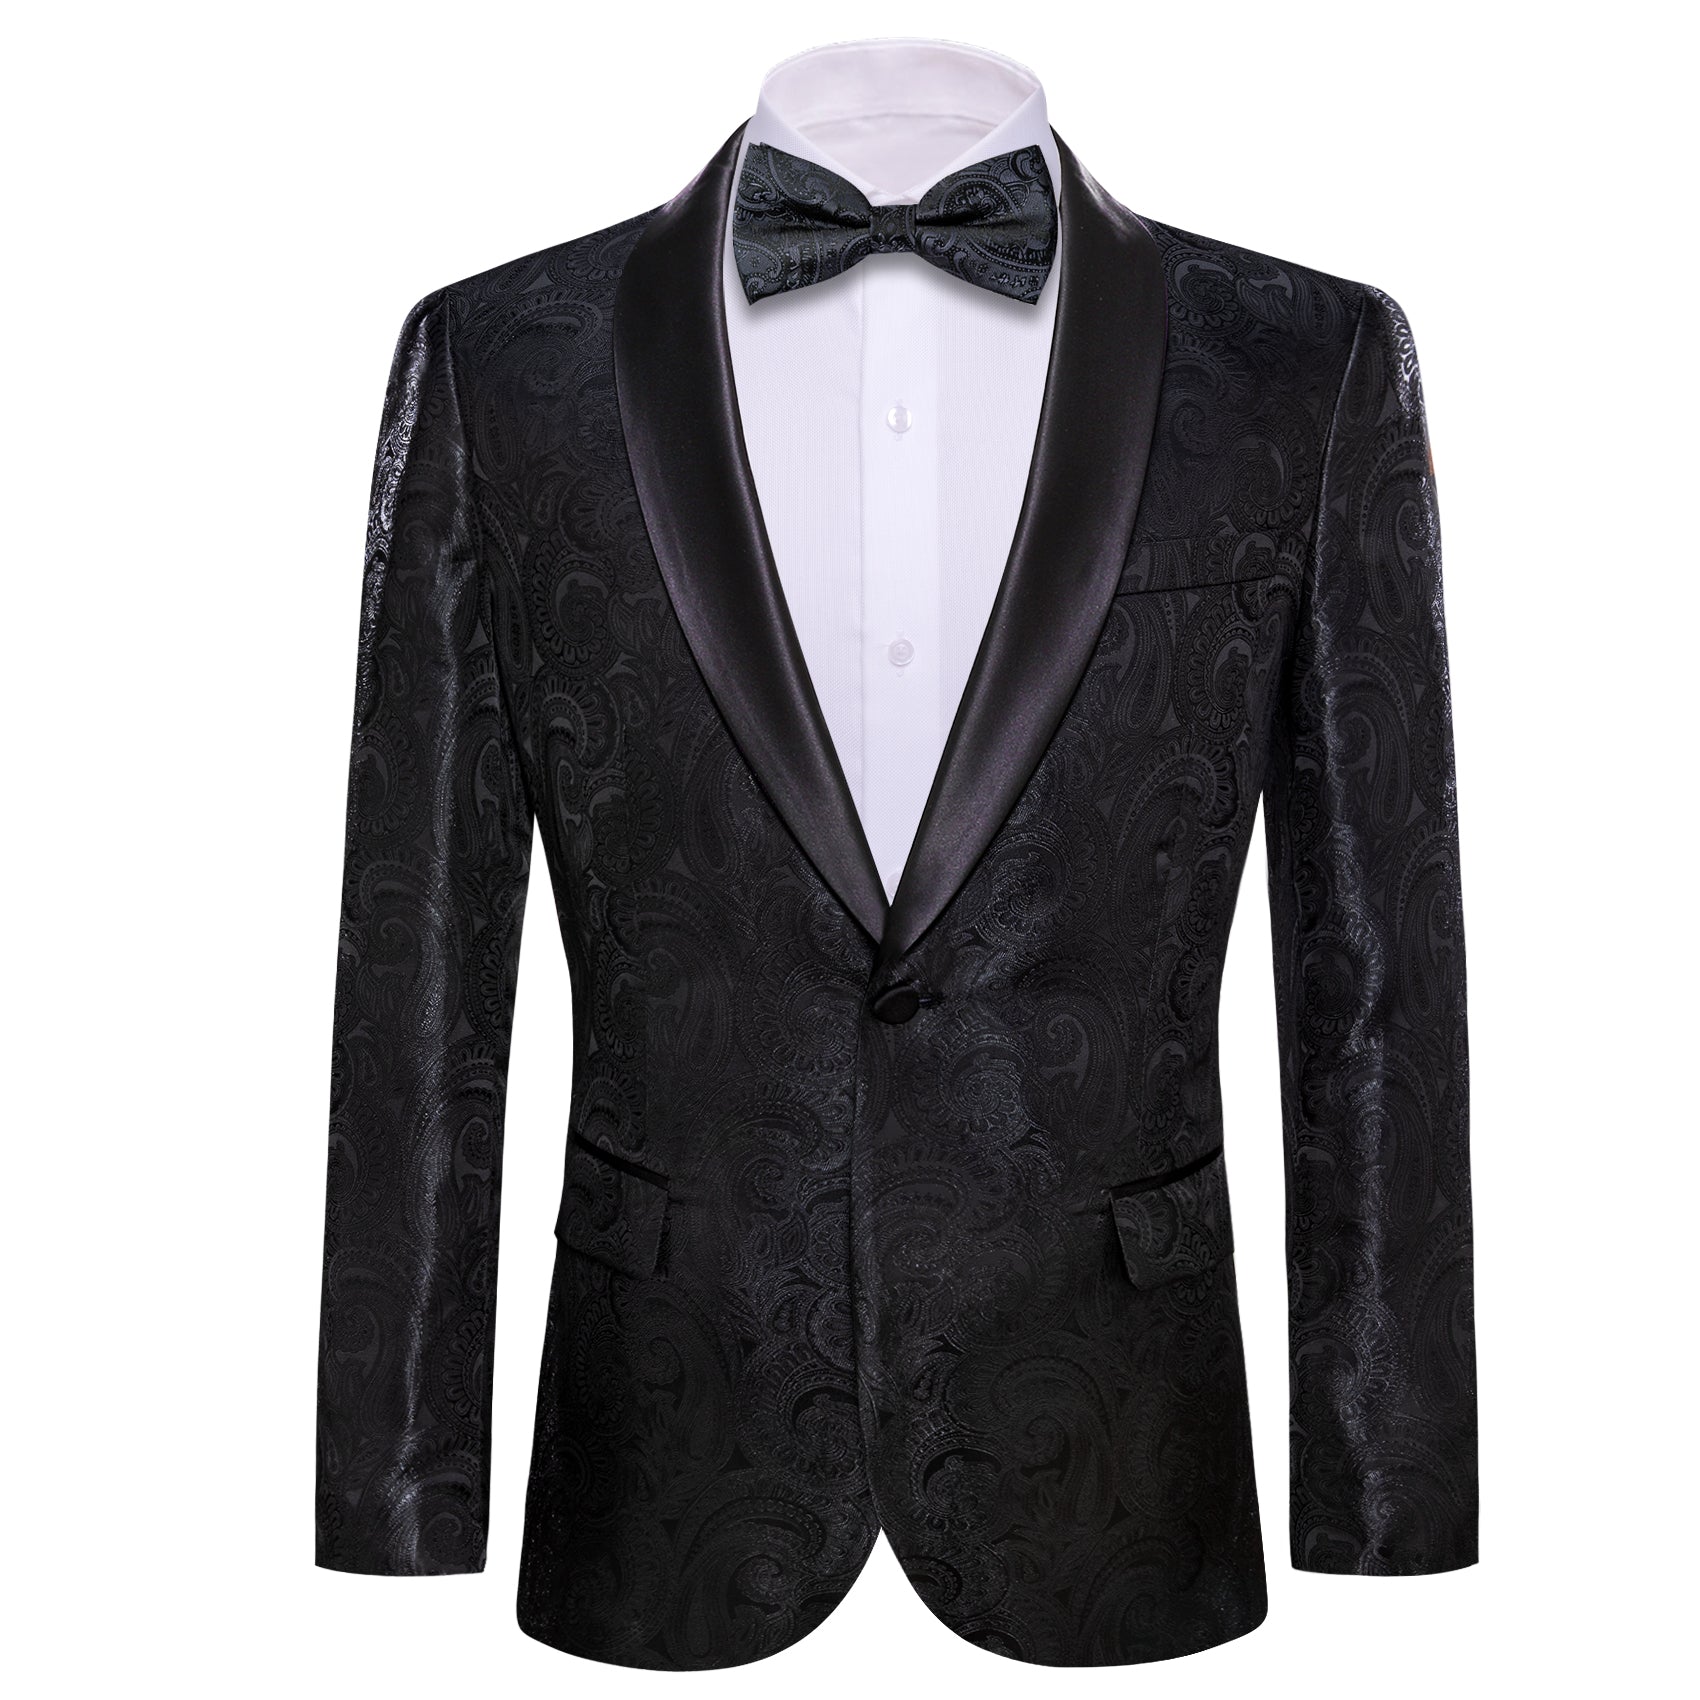 shawl lapel black suit foe wedding and bow tie